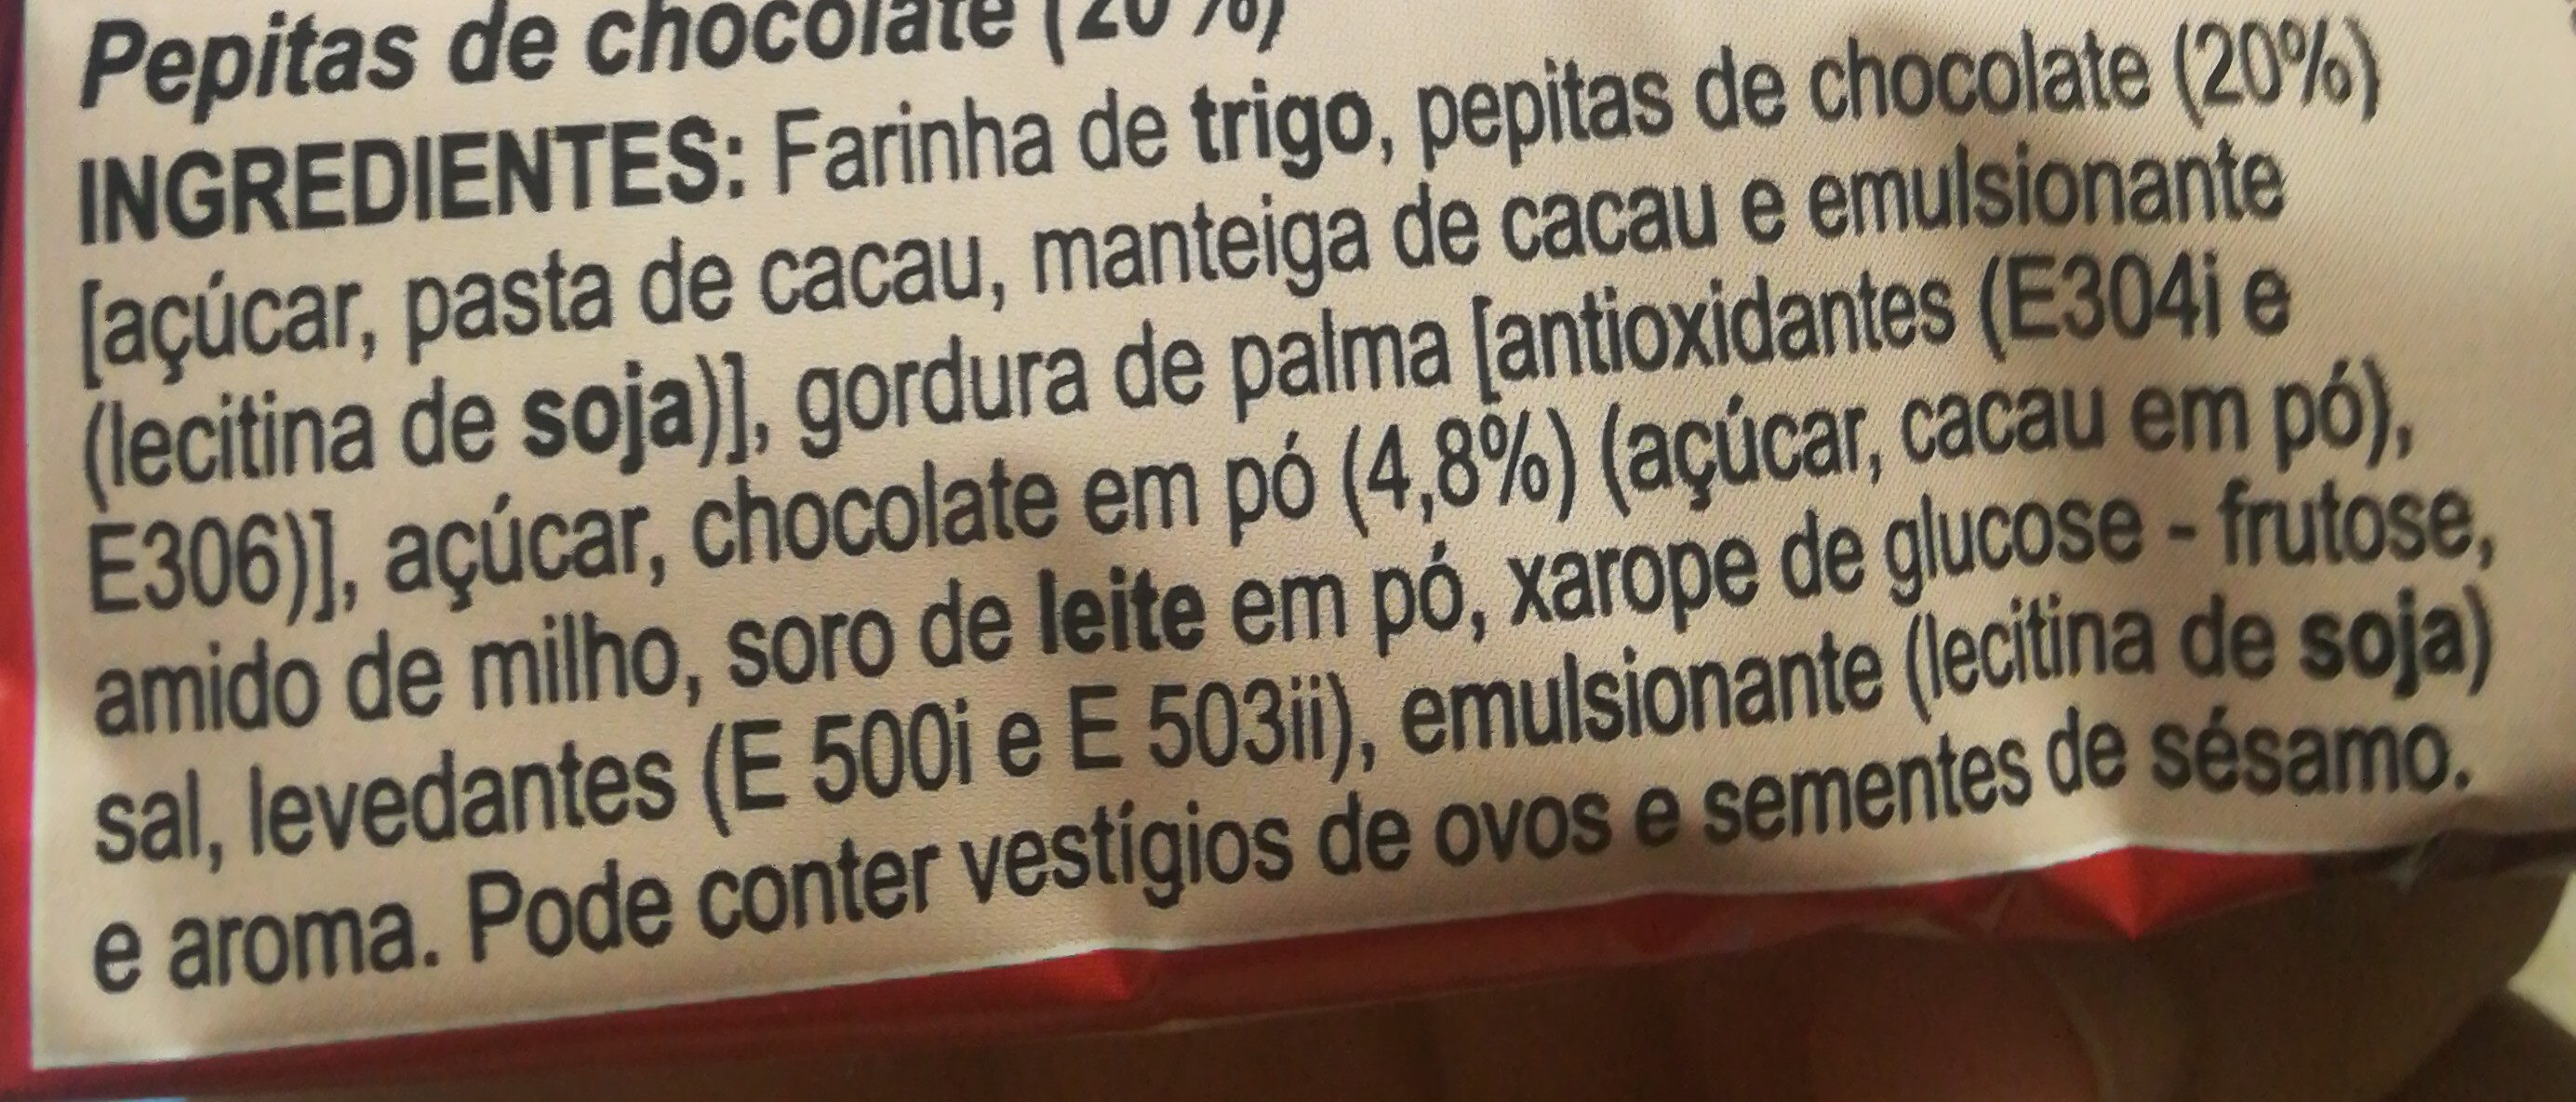 Bolachas de Chocolate - Ingredients - pt